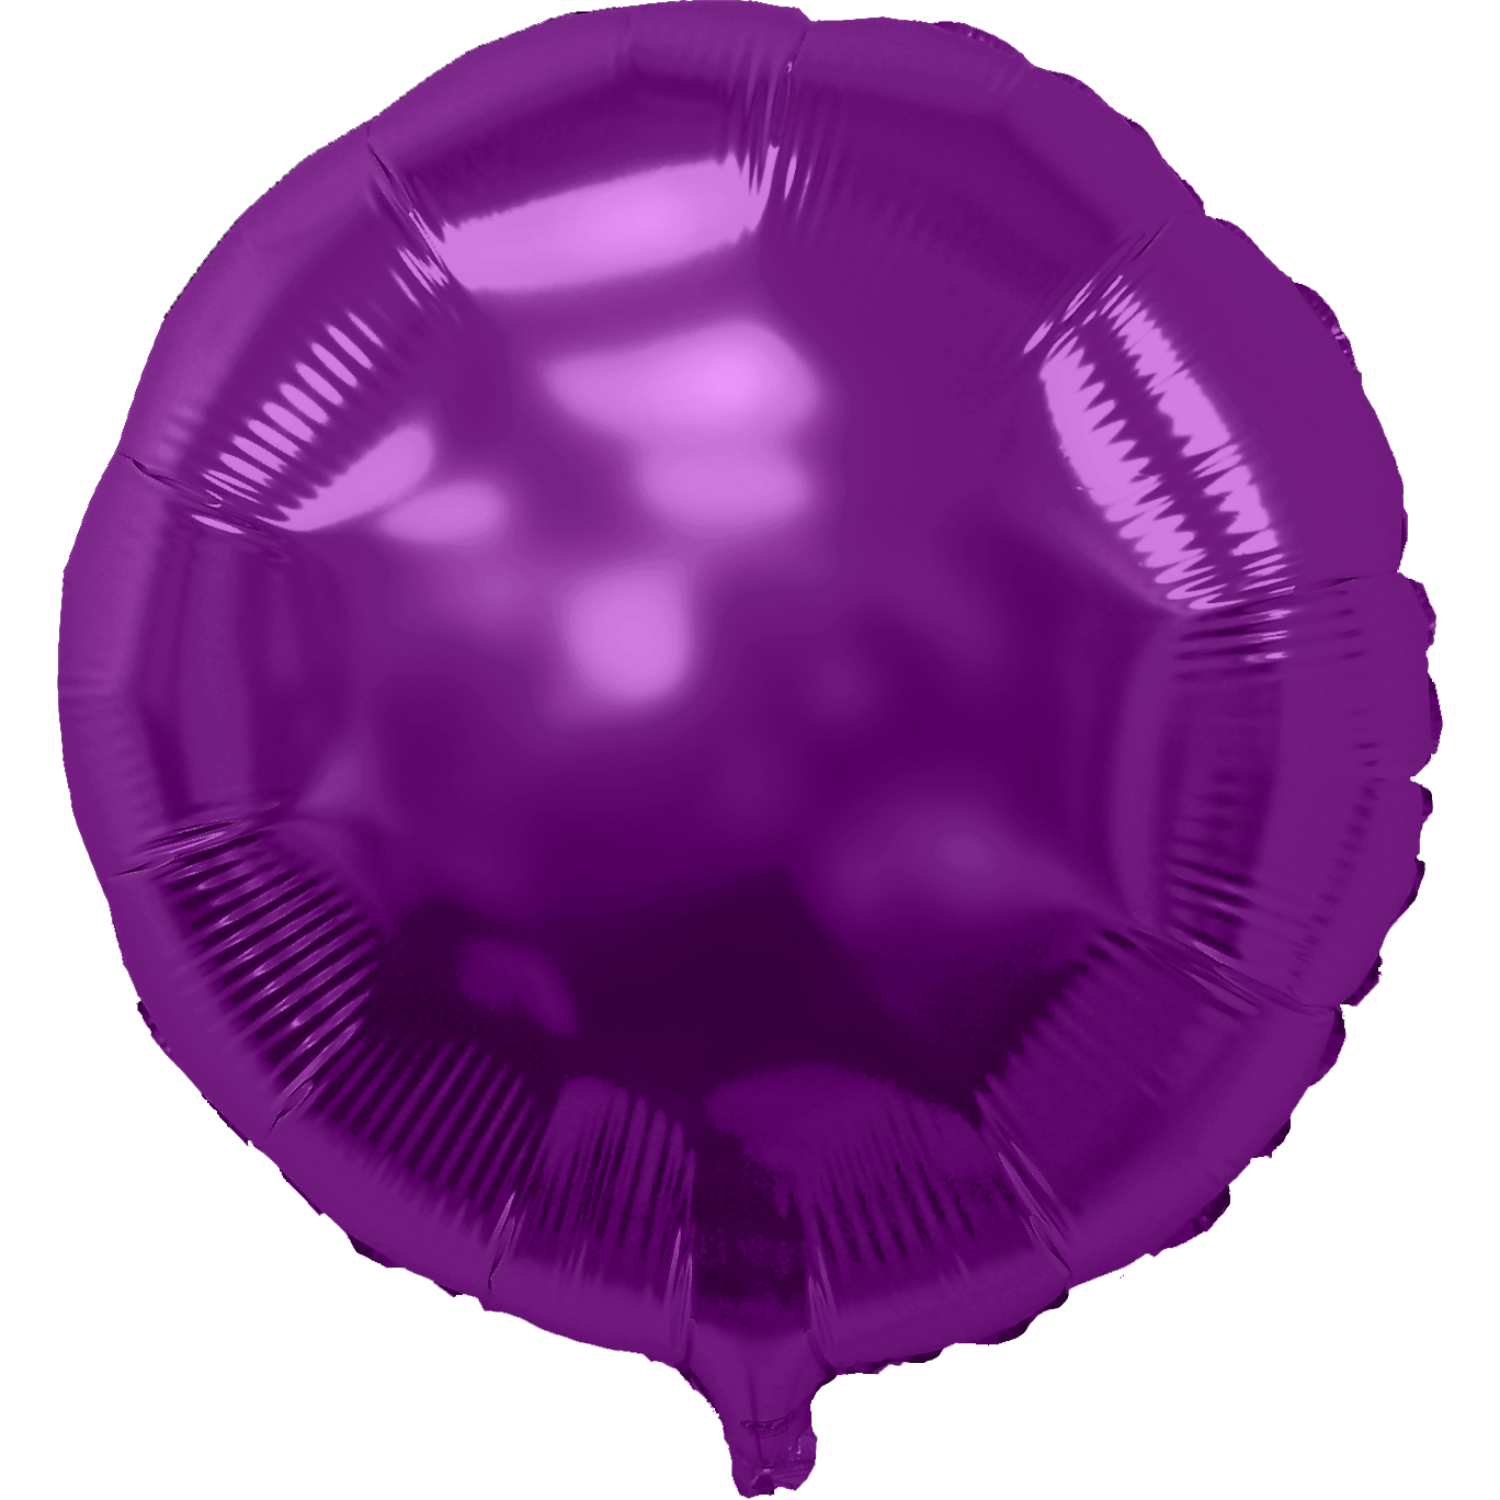 http://images.officebrain.com/migration-api-hidden-new/web/images/626/myrn-round-purple.png